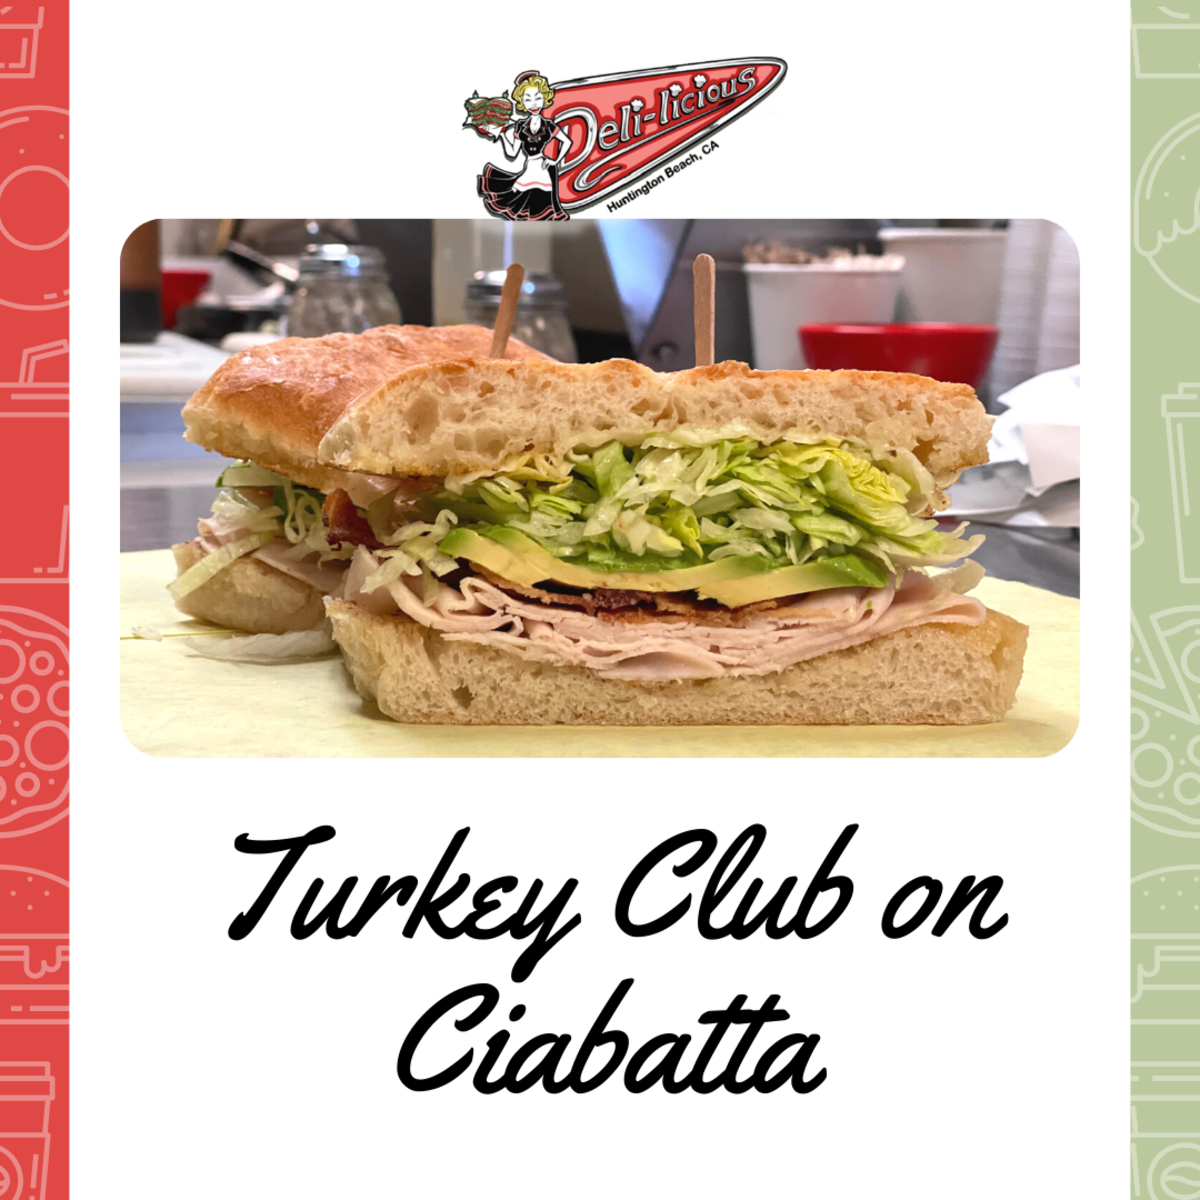 Turkey Club on Ciabatta Sandwich at Deli-licious